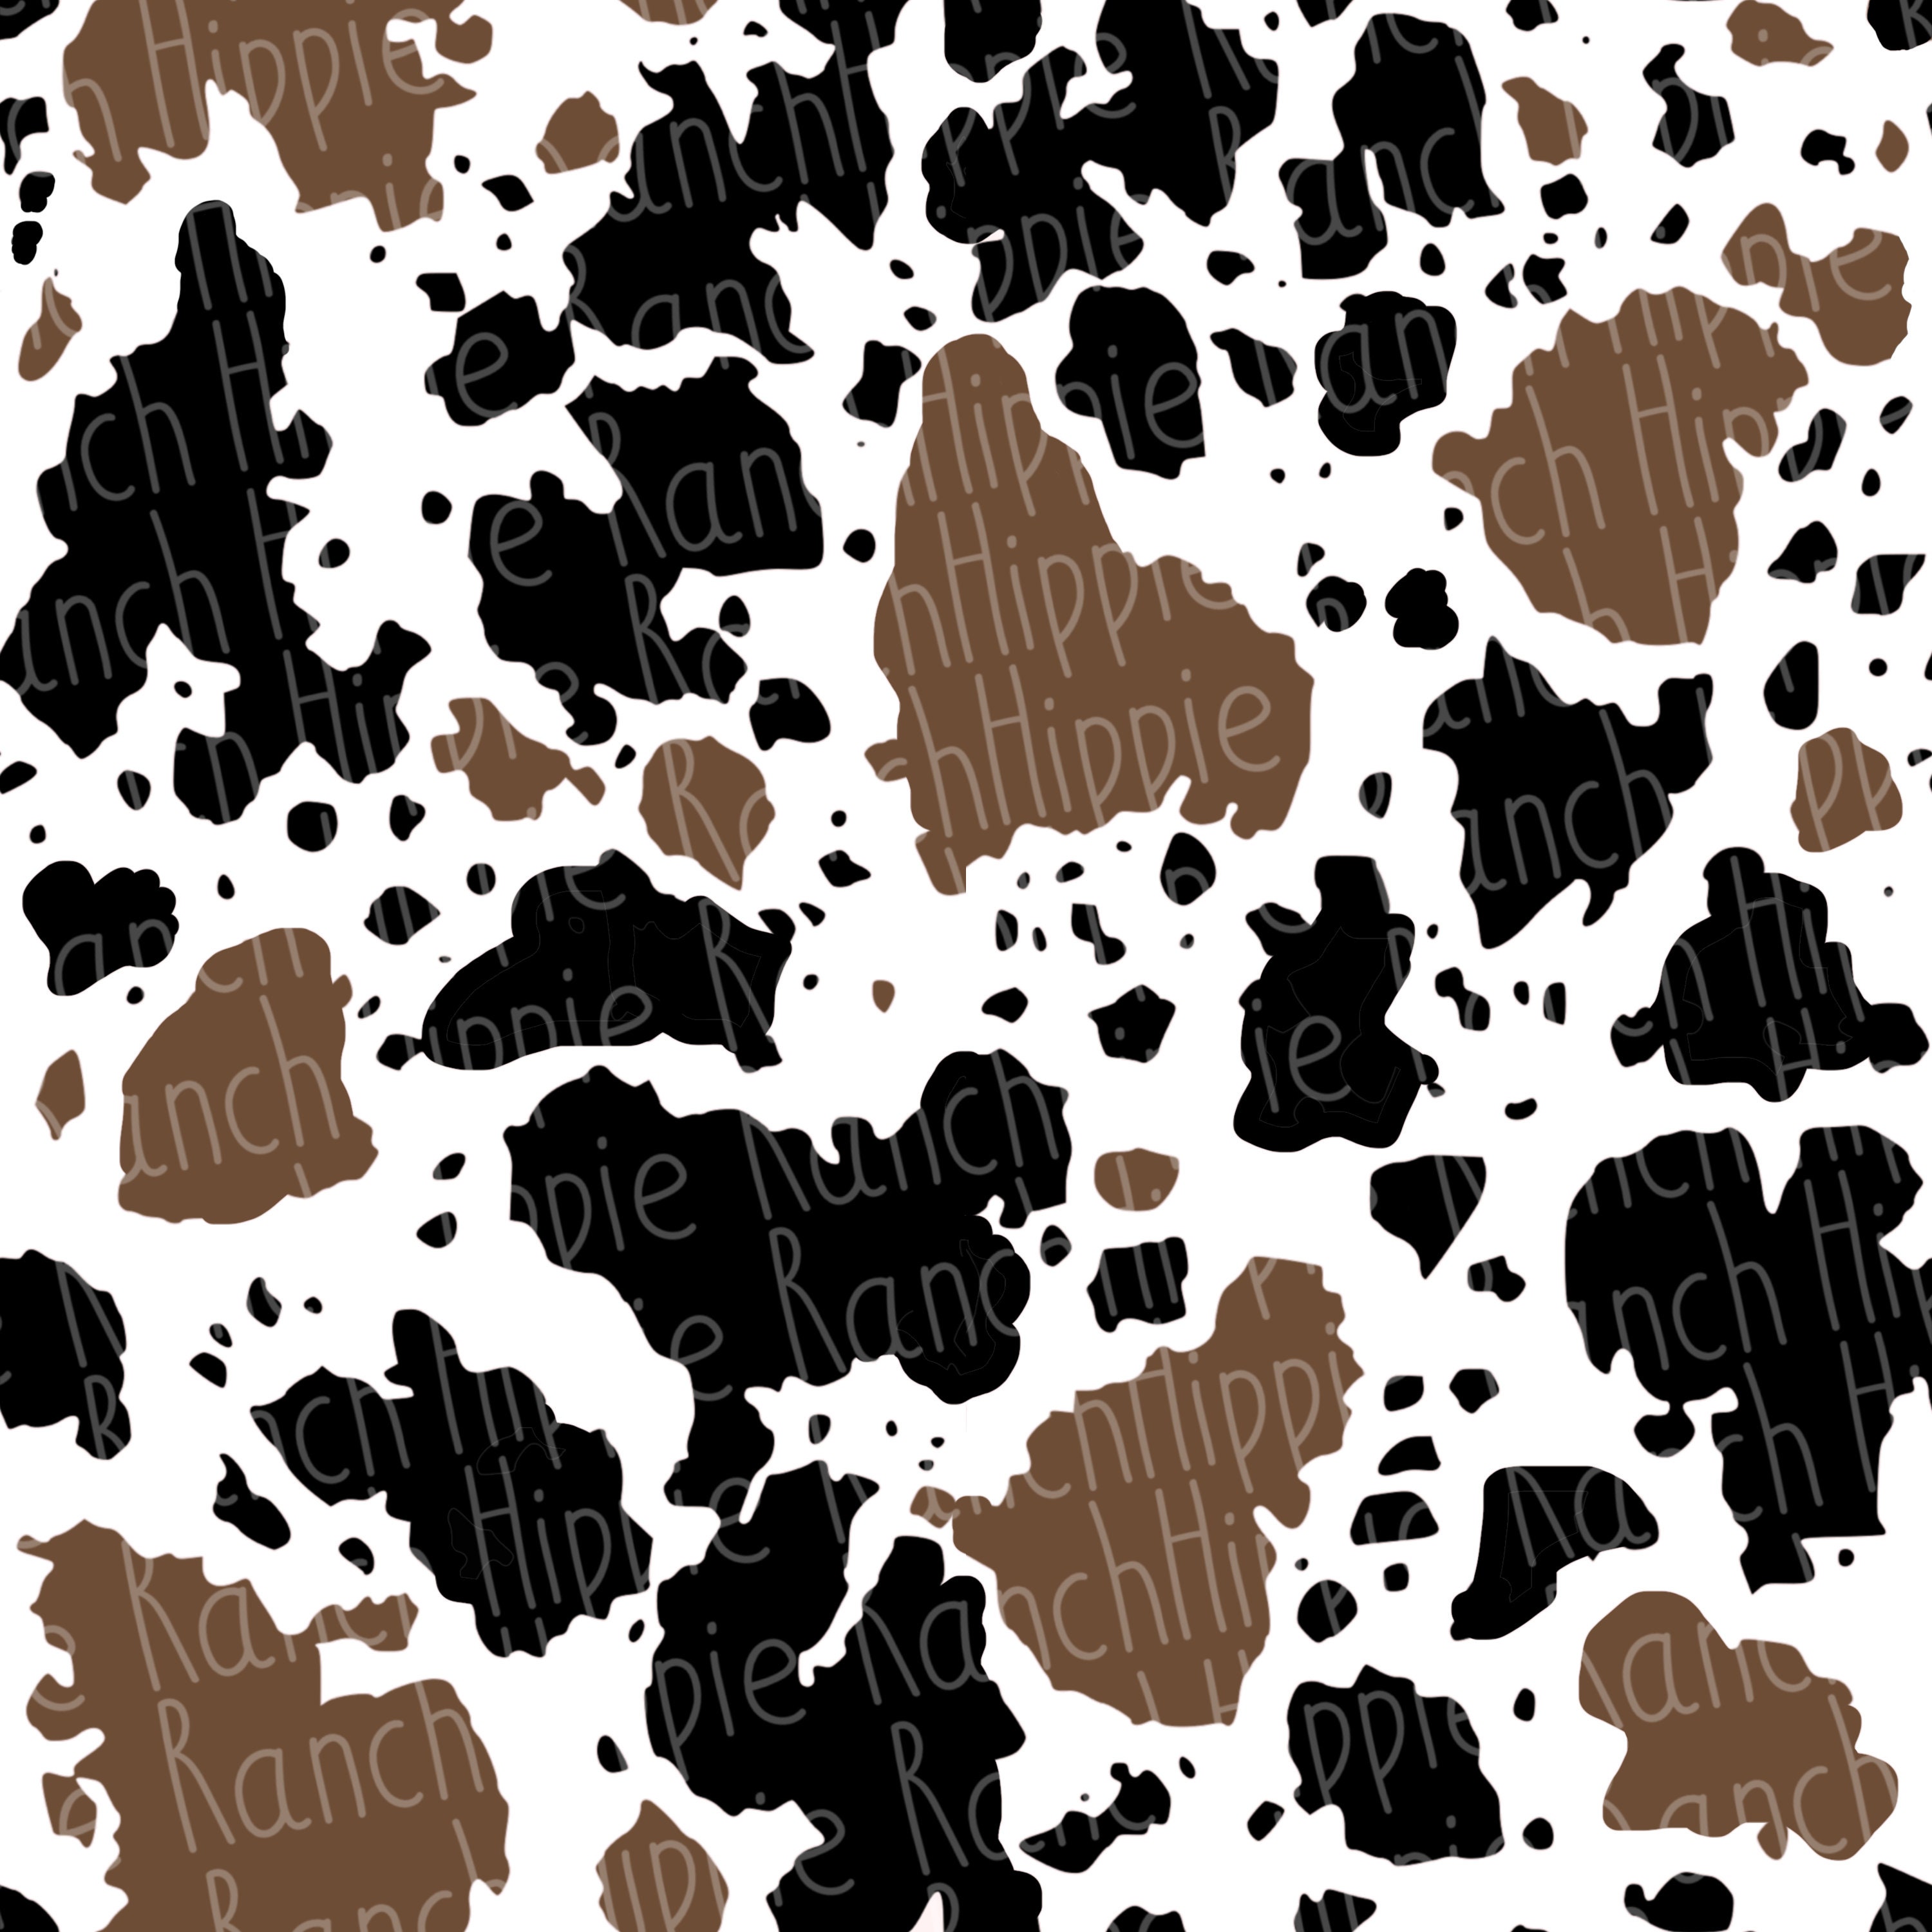 Black and Brown Cow Print Seamless Pattern . Digital Download 